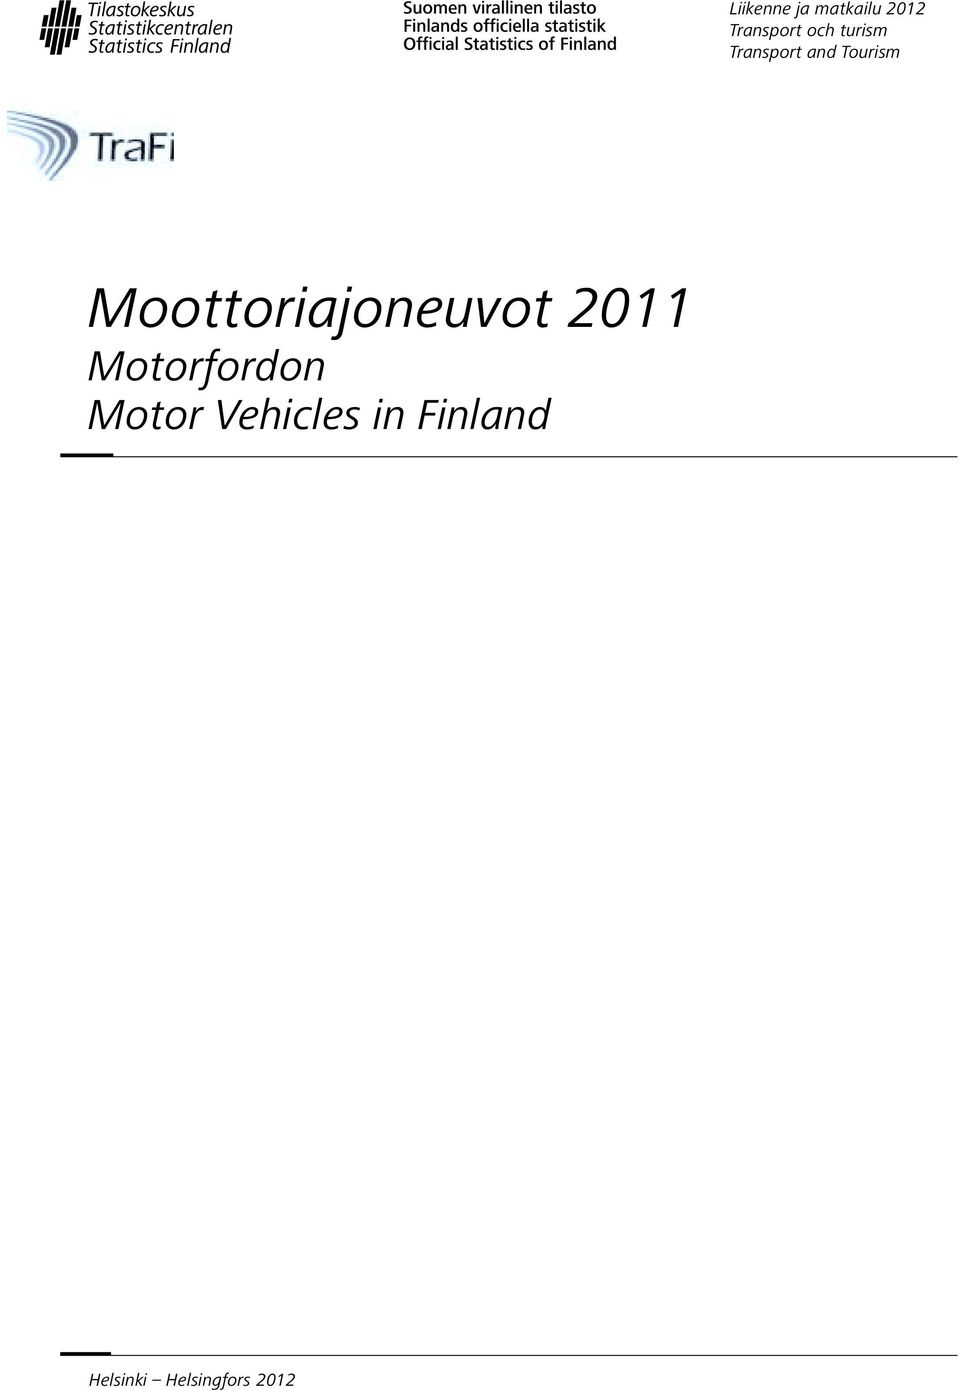 Moottoriajoneuvot 2011 Motorfordon